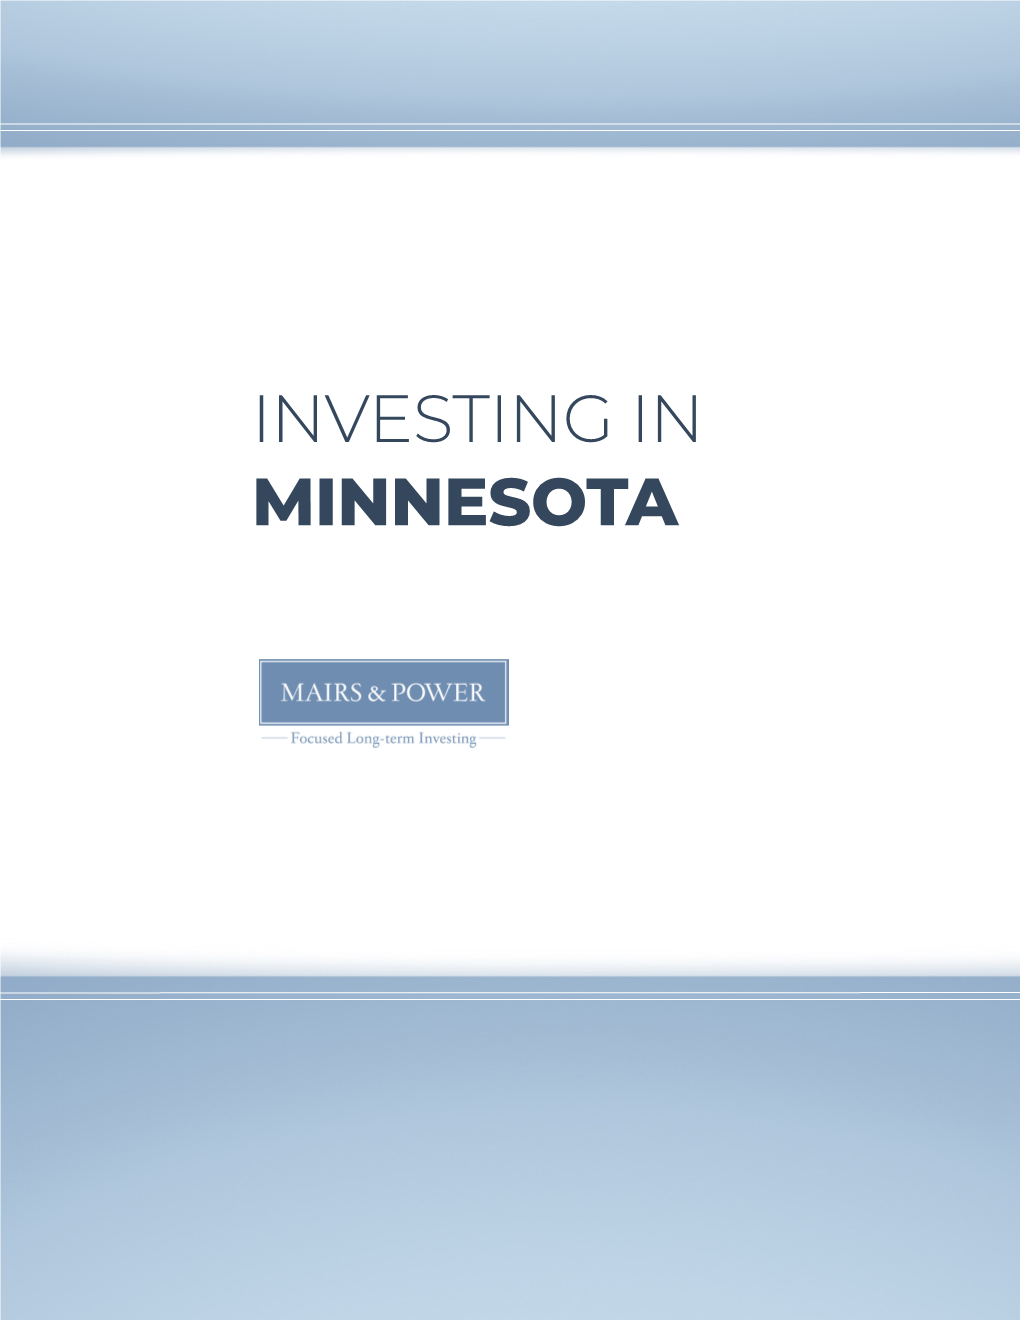 Investing in Minnesota Executive Summary